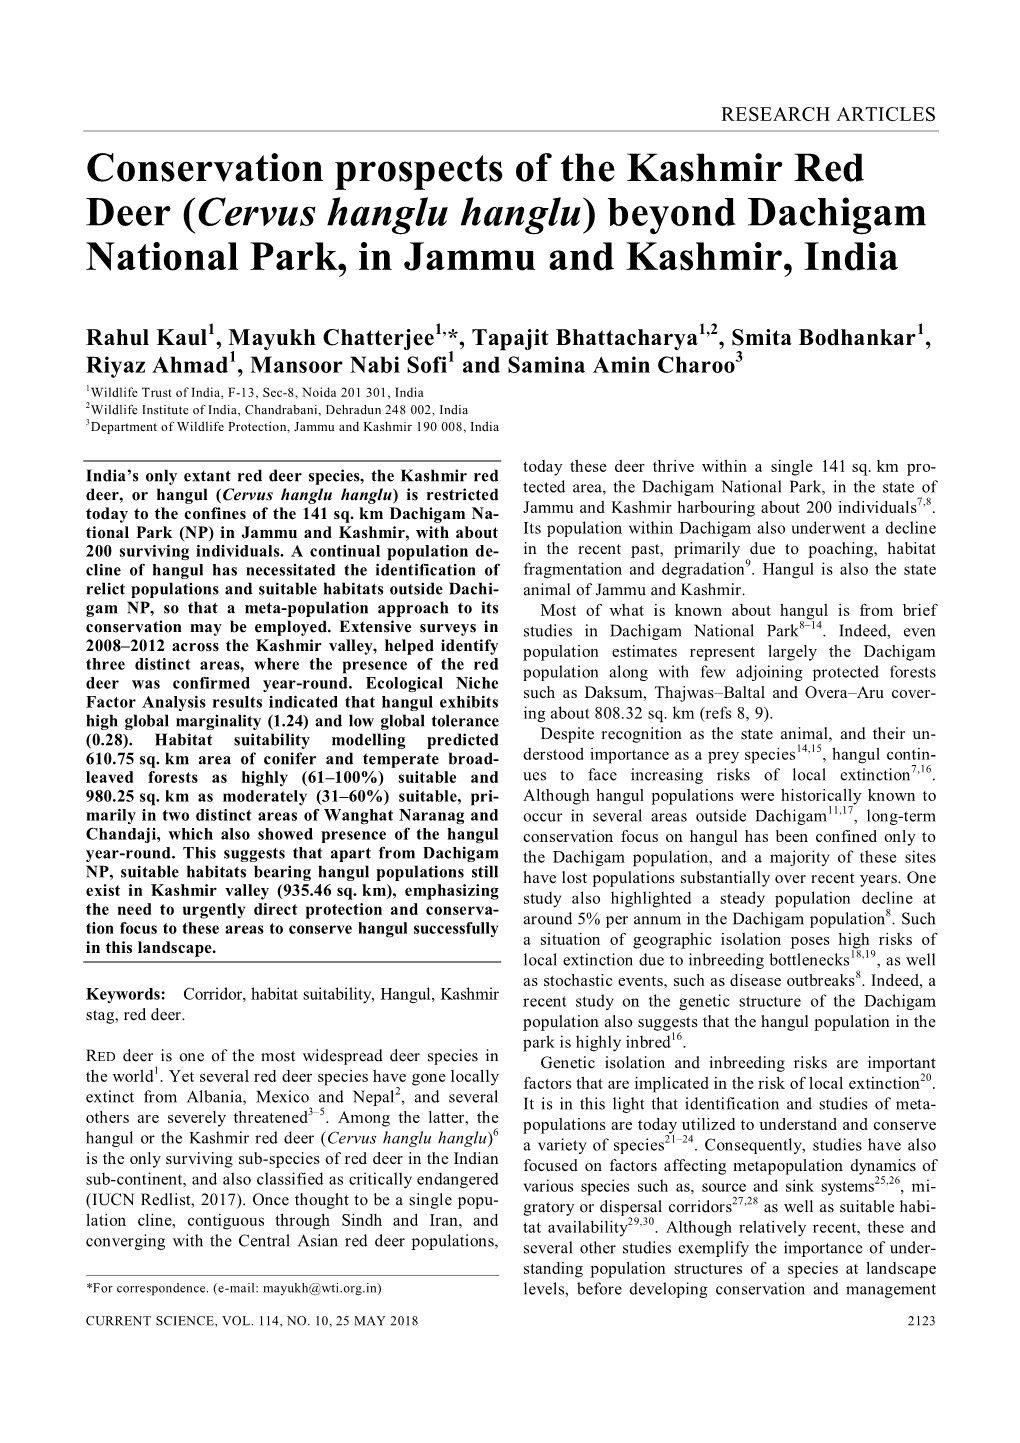 Conservation Prospects of the Kashmir Red Deer (Cervus Hanglu Hanglu) Beyond Dachigam National Park, in Jammu and Kashmir, India